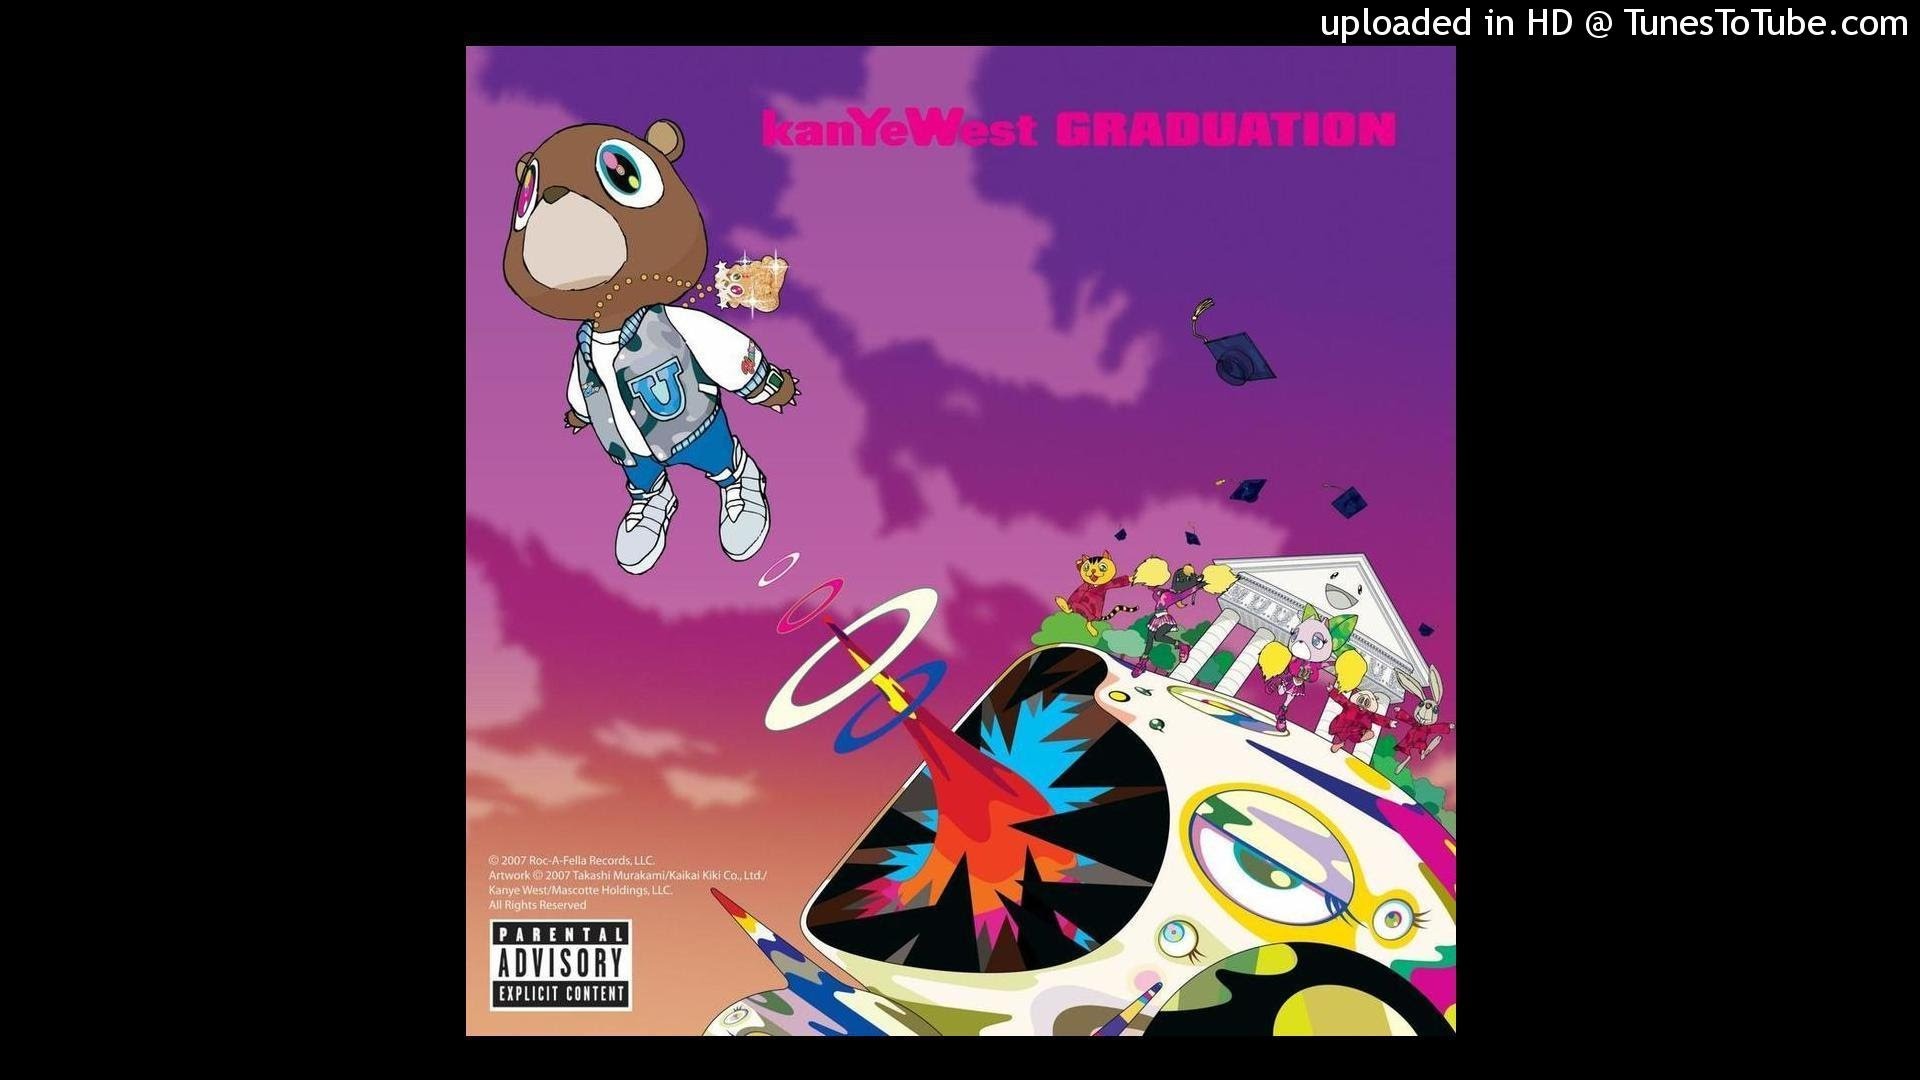 Kanye west graduation album cover cap - waterlito